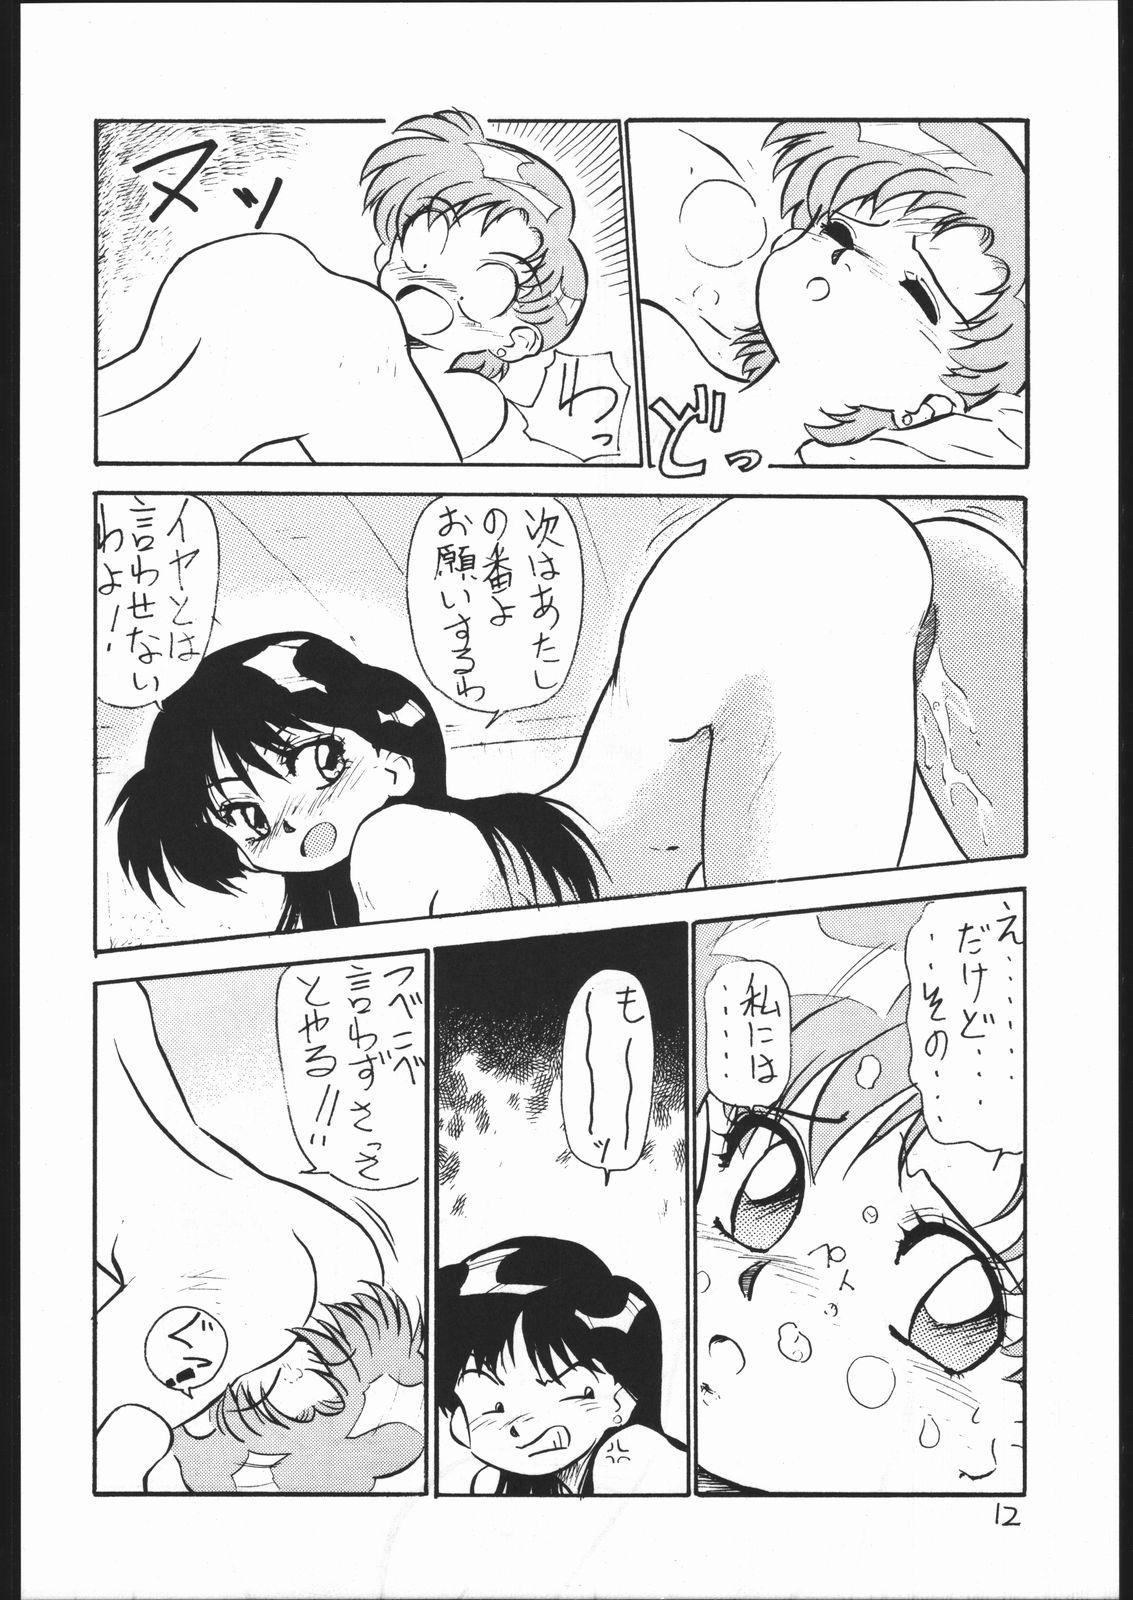 Creampies V・H・S・M Vol. 1 - Sailor moon 8teenxxx - Page 11